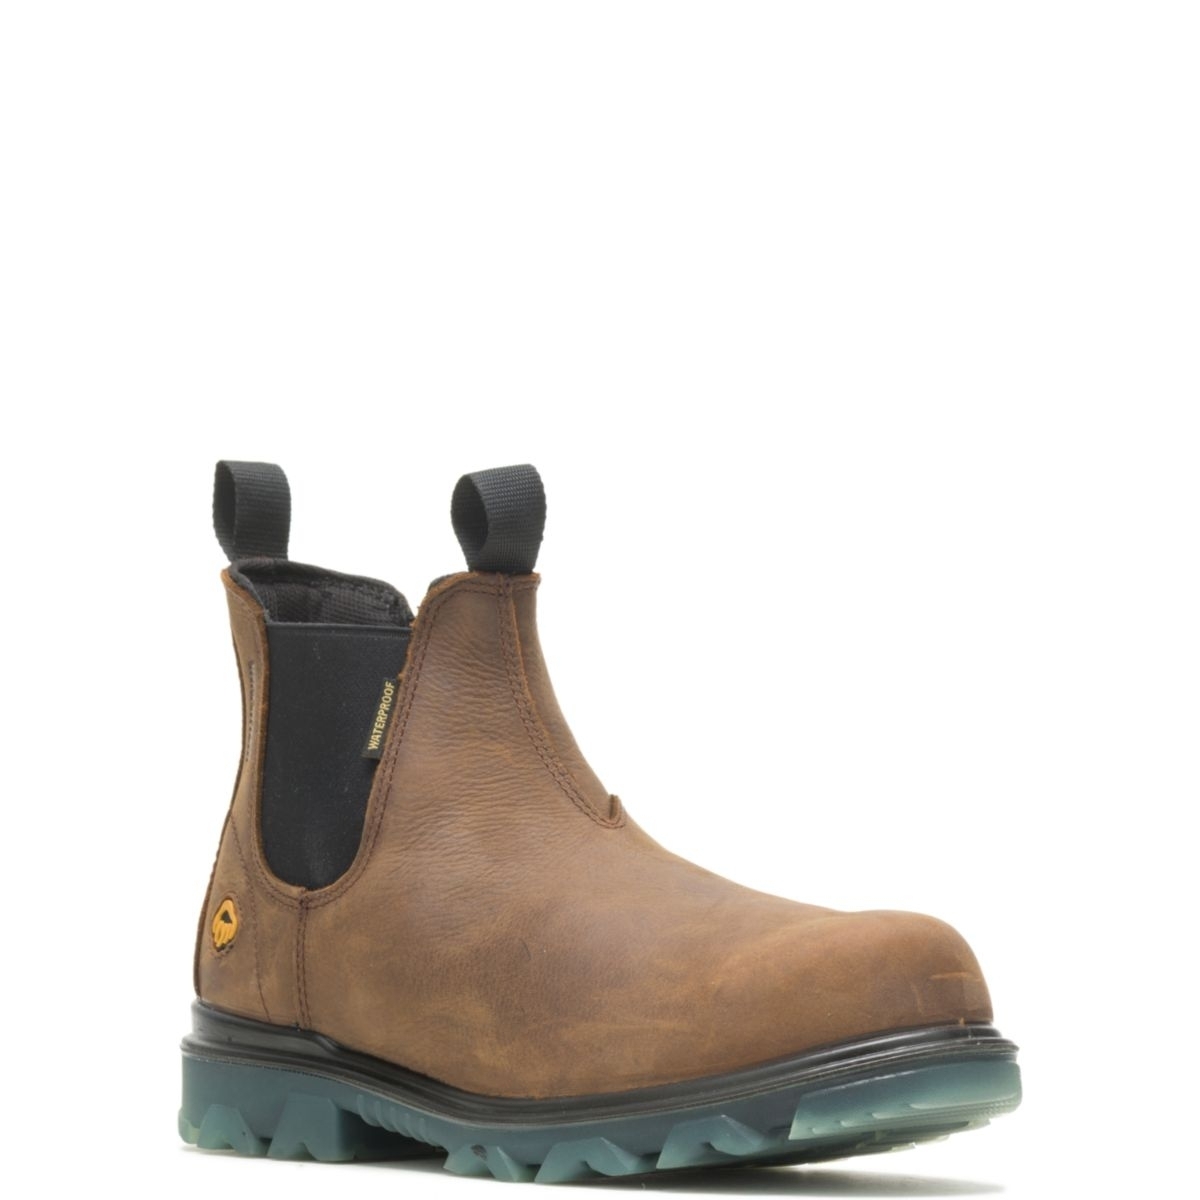 WOLVERINE Men's I-90 EPXÂ® Waterproof Soft Toe Romeo Pull On Work Boot Brown - W10790 - SUDAN BROWN, 8.5